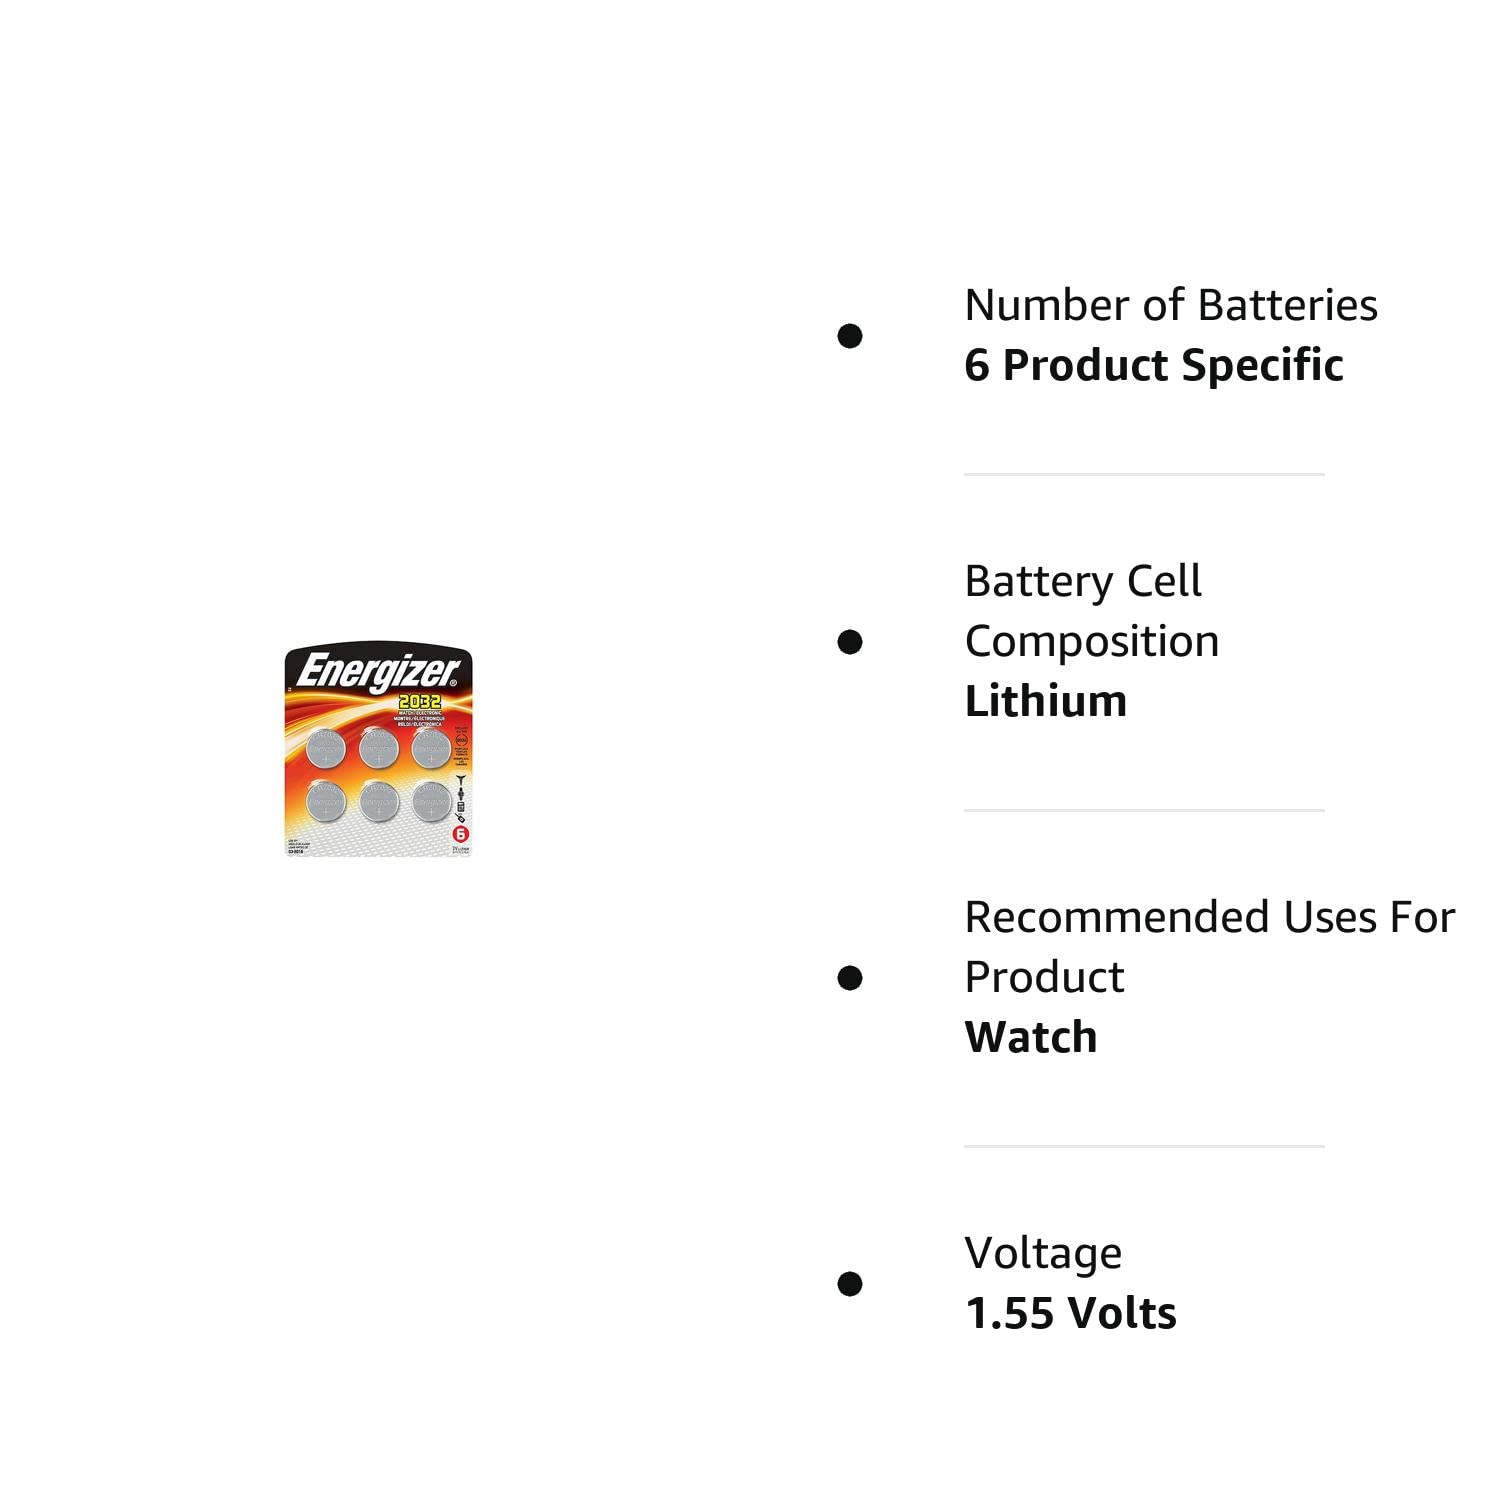 Energizer Lithium Batteries 2032 - 6 pack